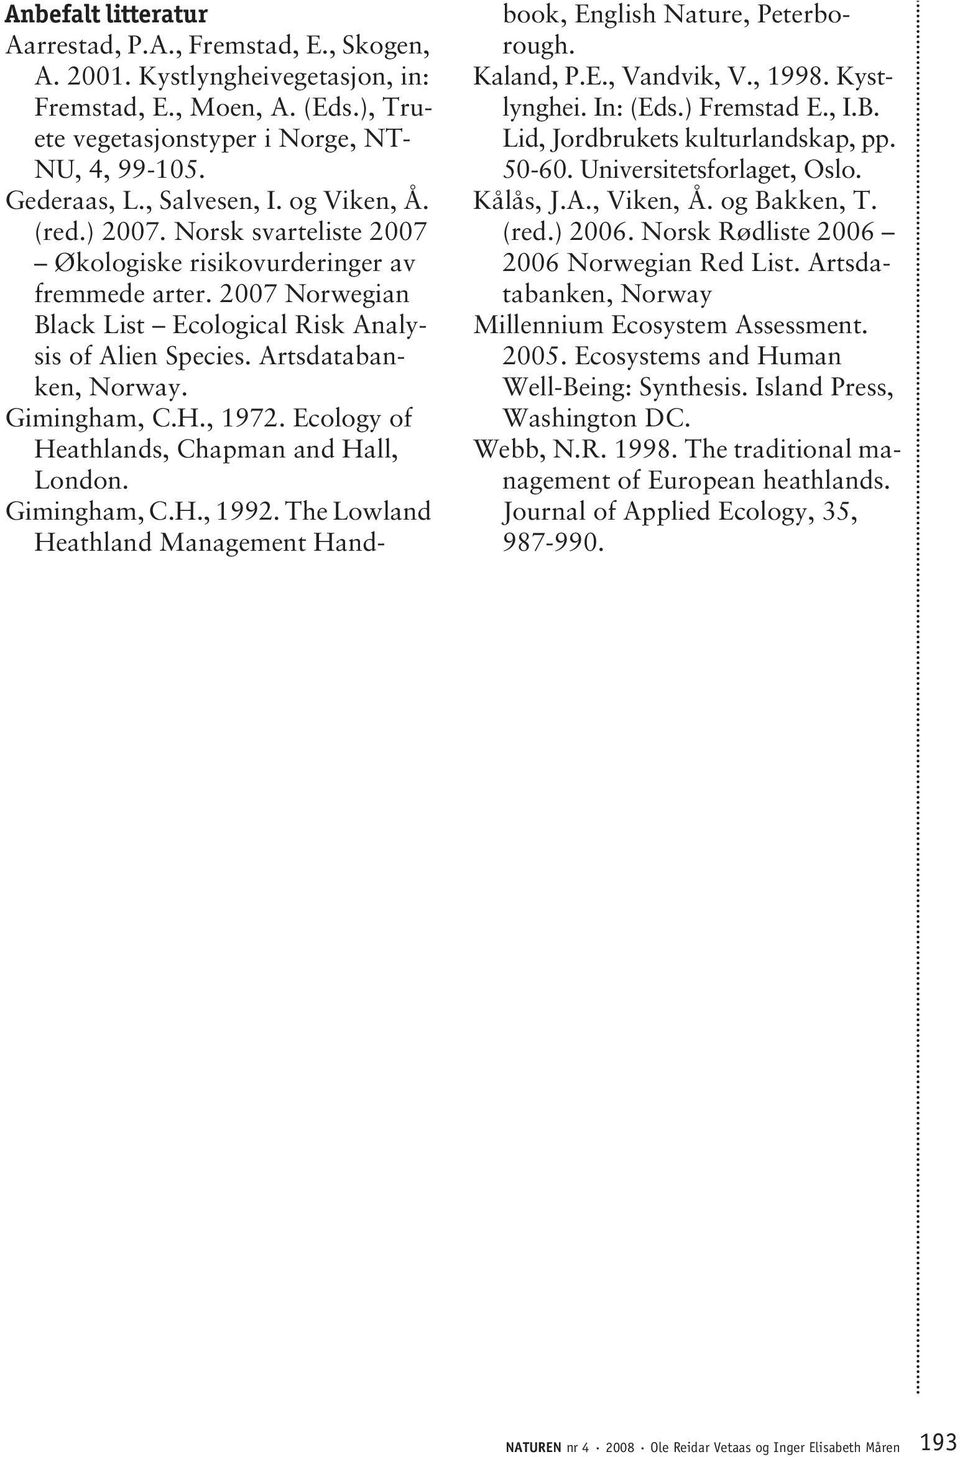 Artsdatabanken, Norway. Gimingham, C.H., 1972. Ecology of Heathlands, Chapman and Hall, London. Gimingham, C.H., 1992. The Lowland Heathland Management Handbook, English Nature, Peterborough.